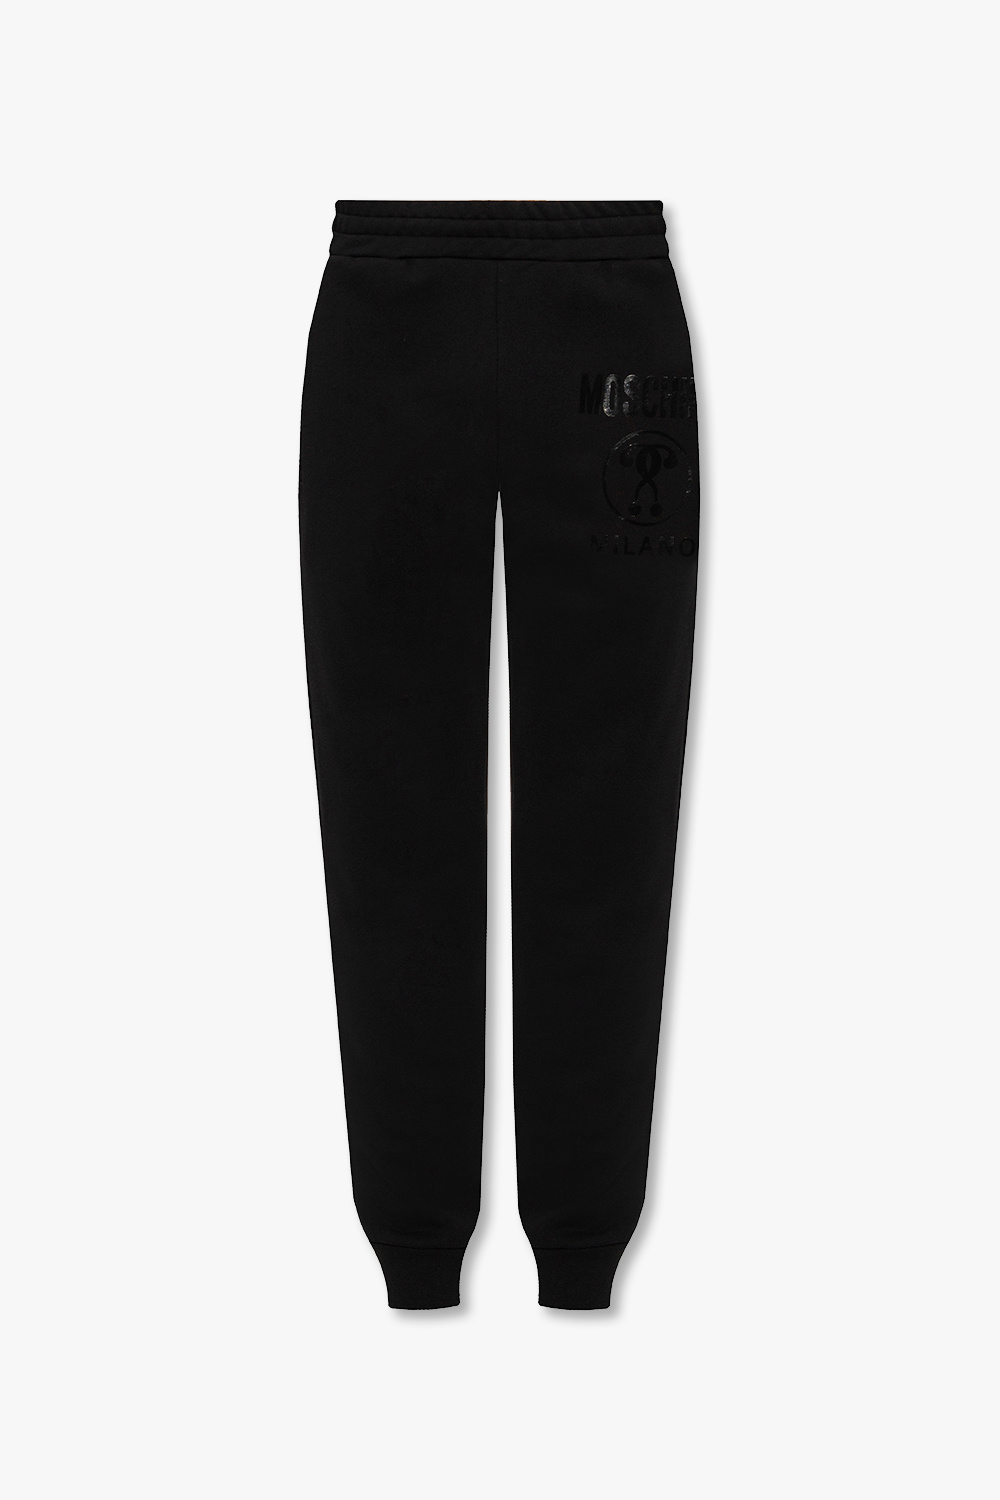 Moschino Sportswear Essential Women's Jogger Pants